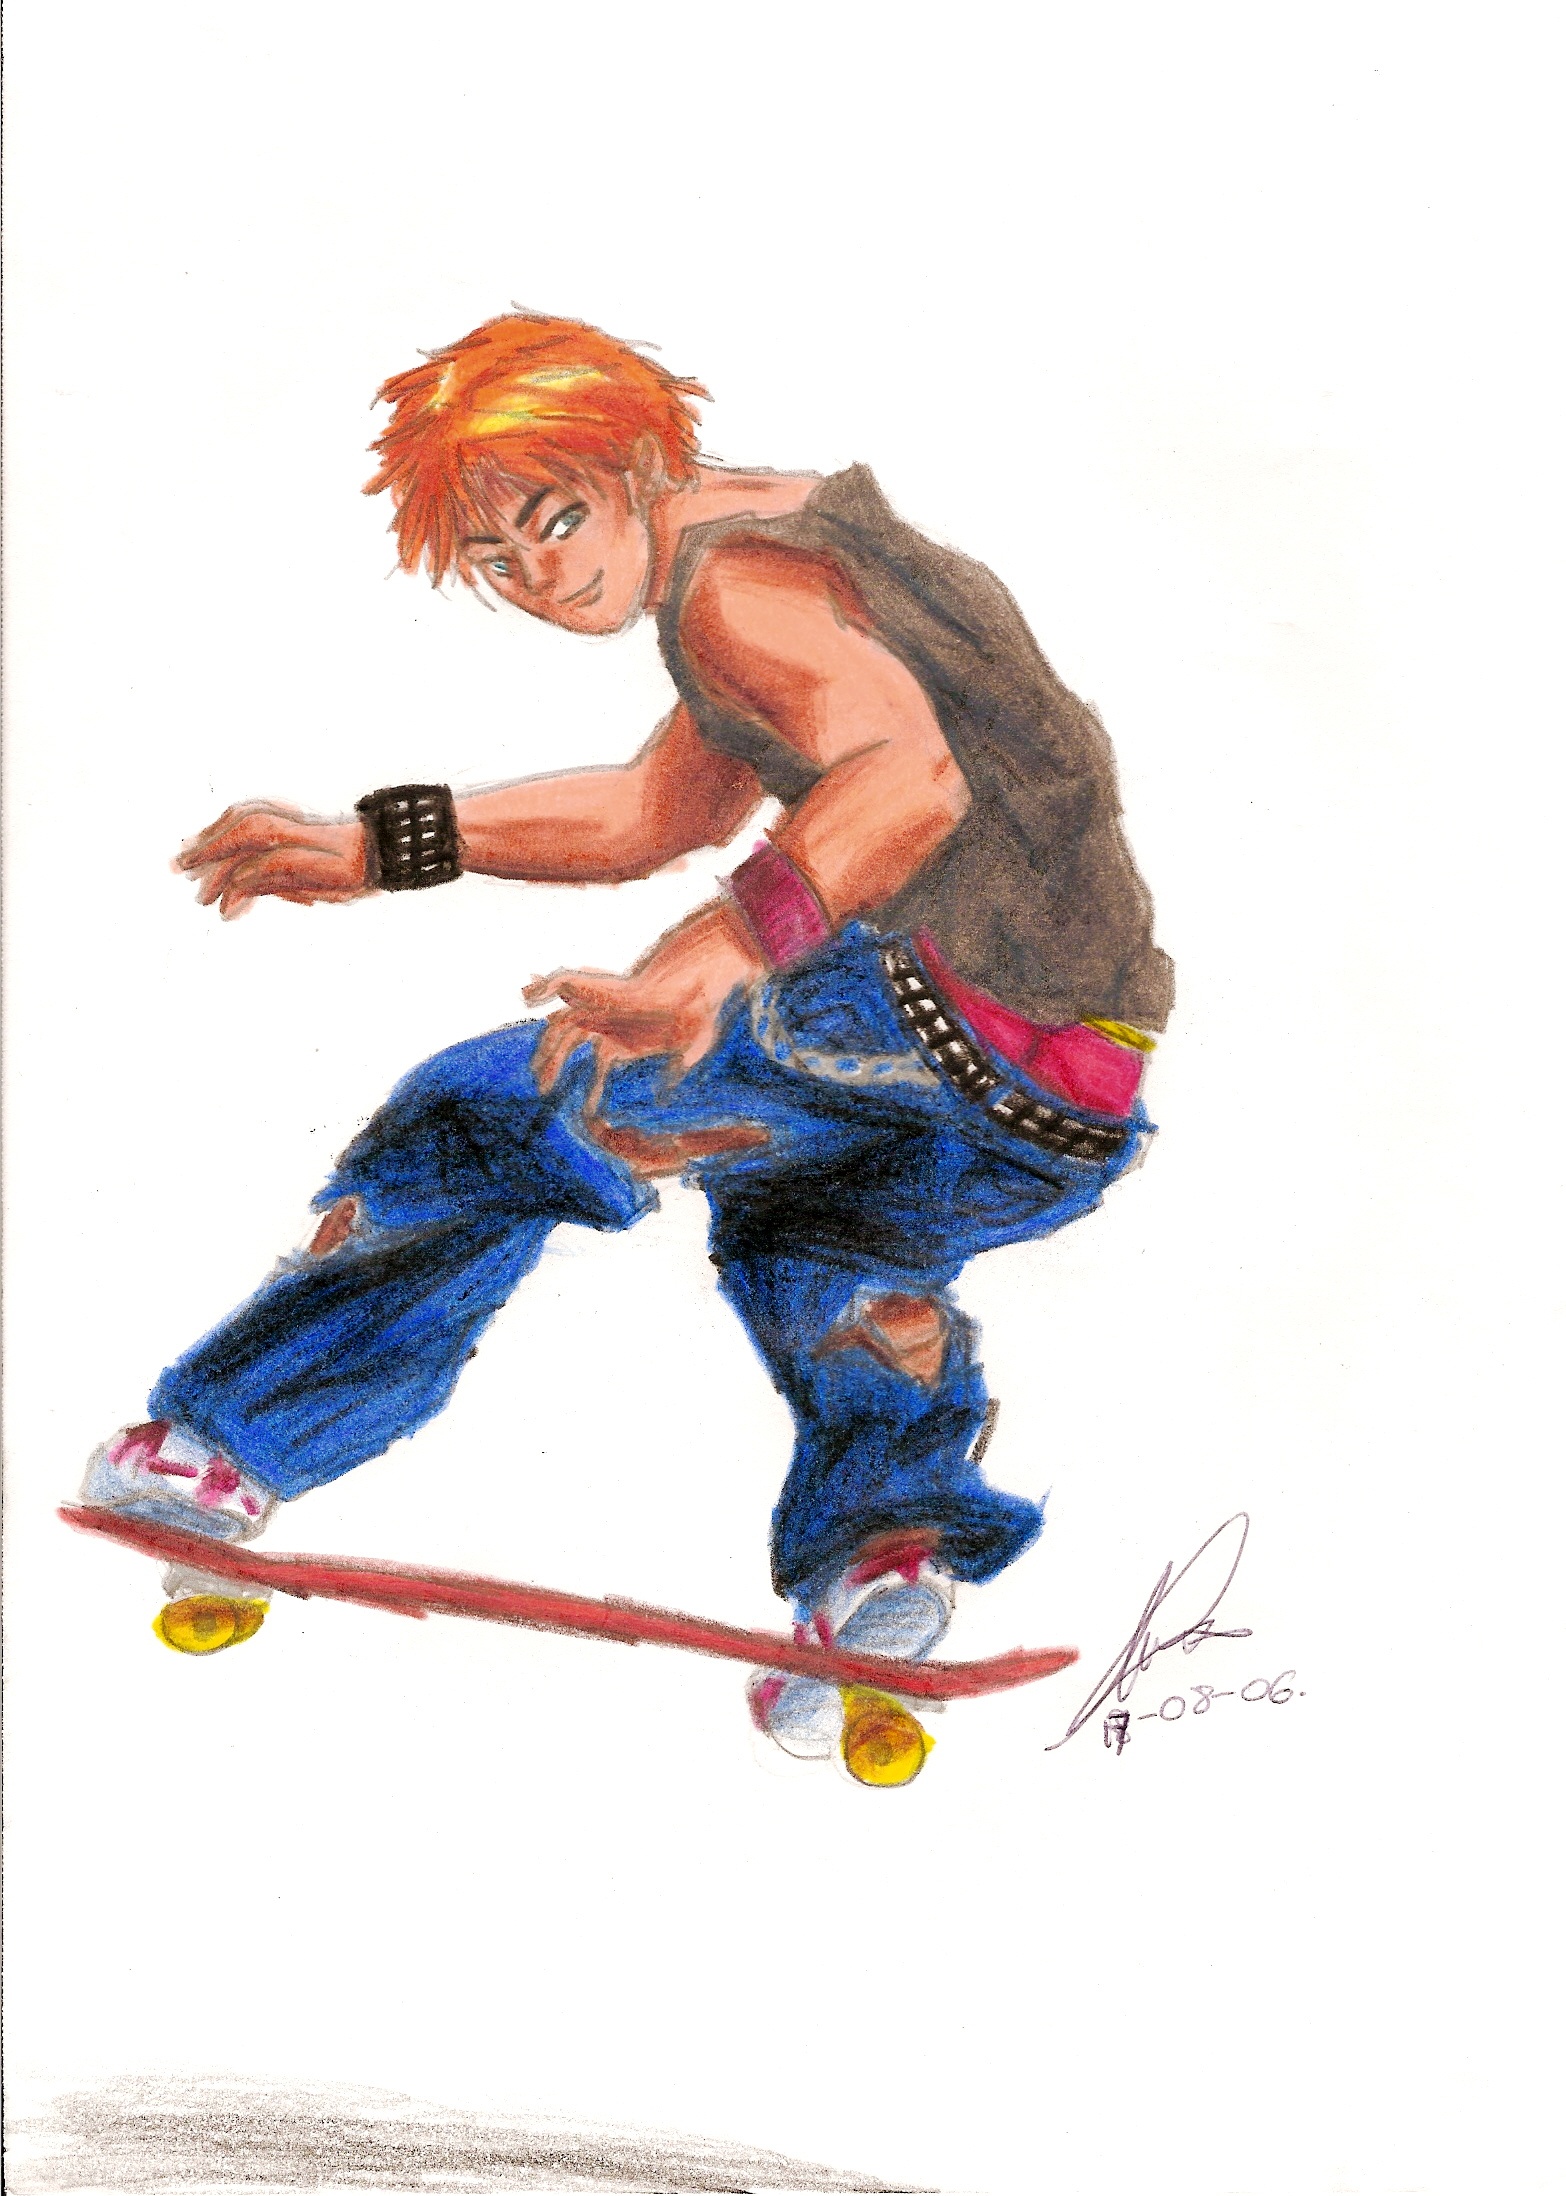 Skate_-_Boy'redhair'